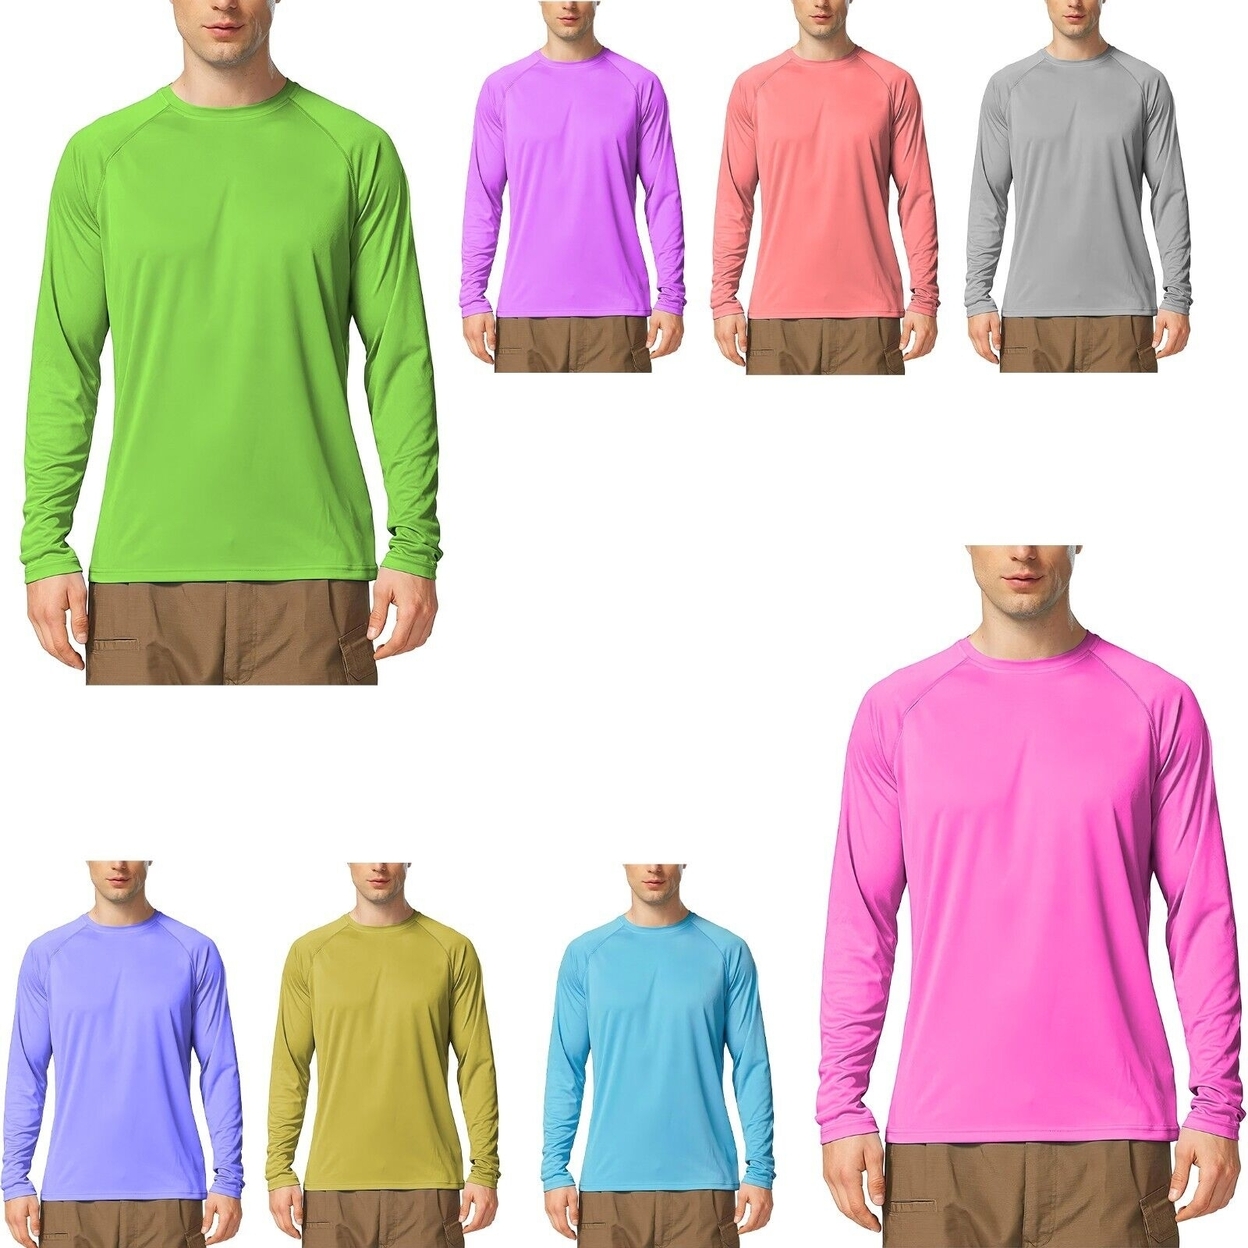 3-Pack: Men's Dri-Fit Moisture Wicking Athletic Cool Performance Slim Fit Long Sleeve T-Shirts - Medium